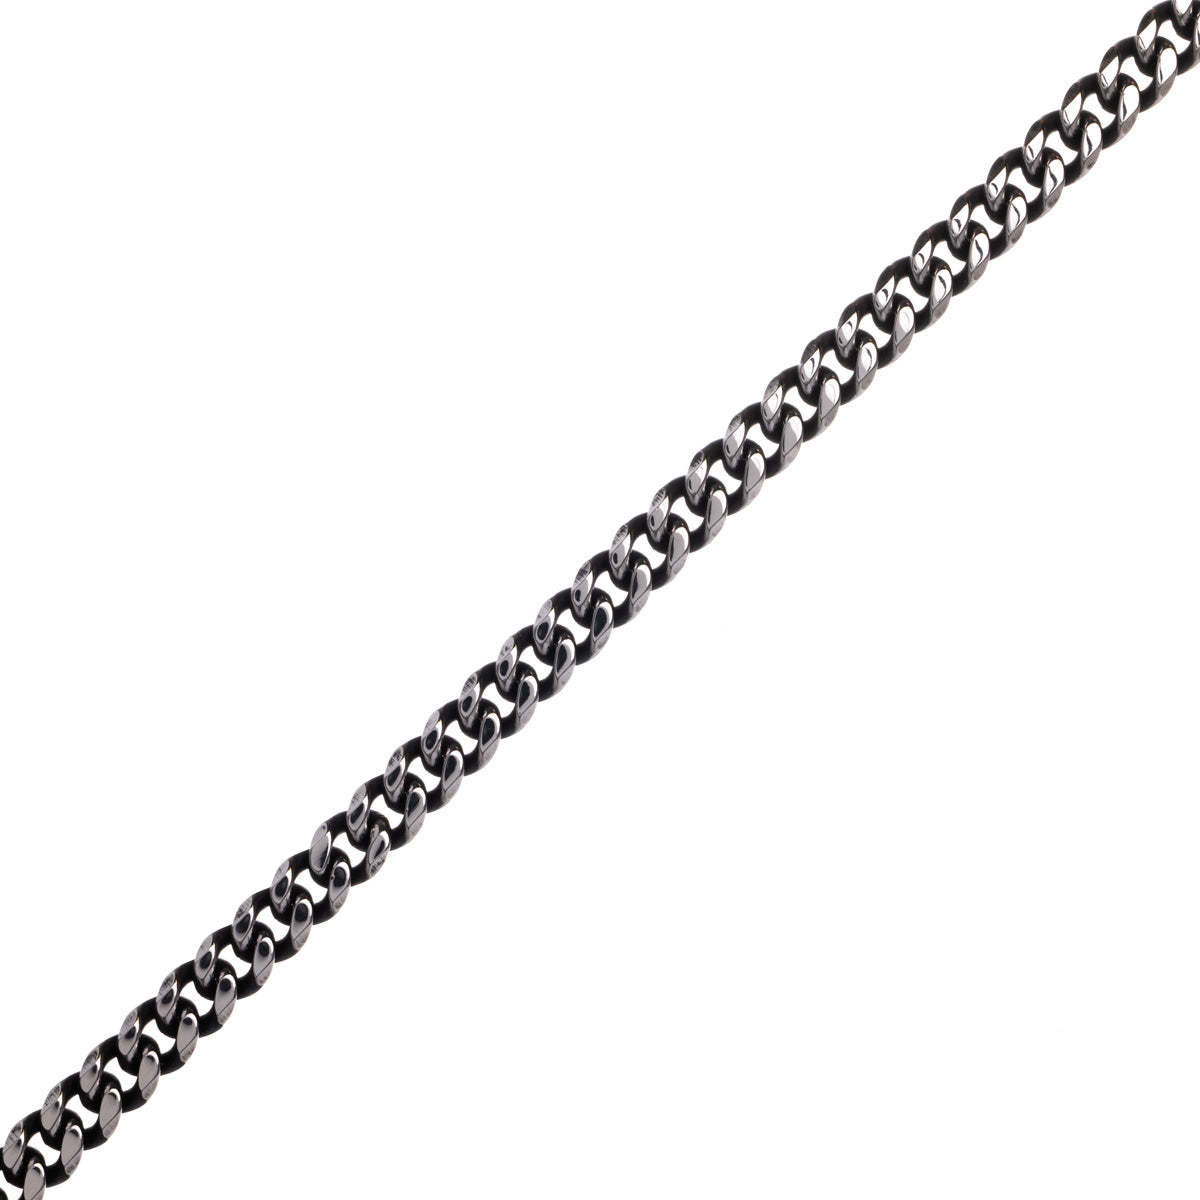 Armour chain halsband i mörkt stål 6mm 55cm